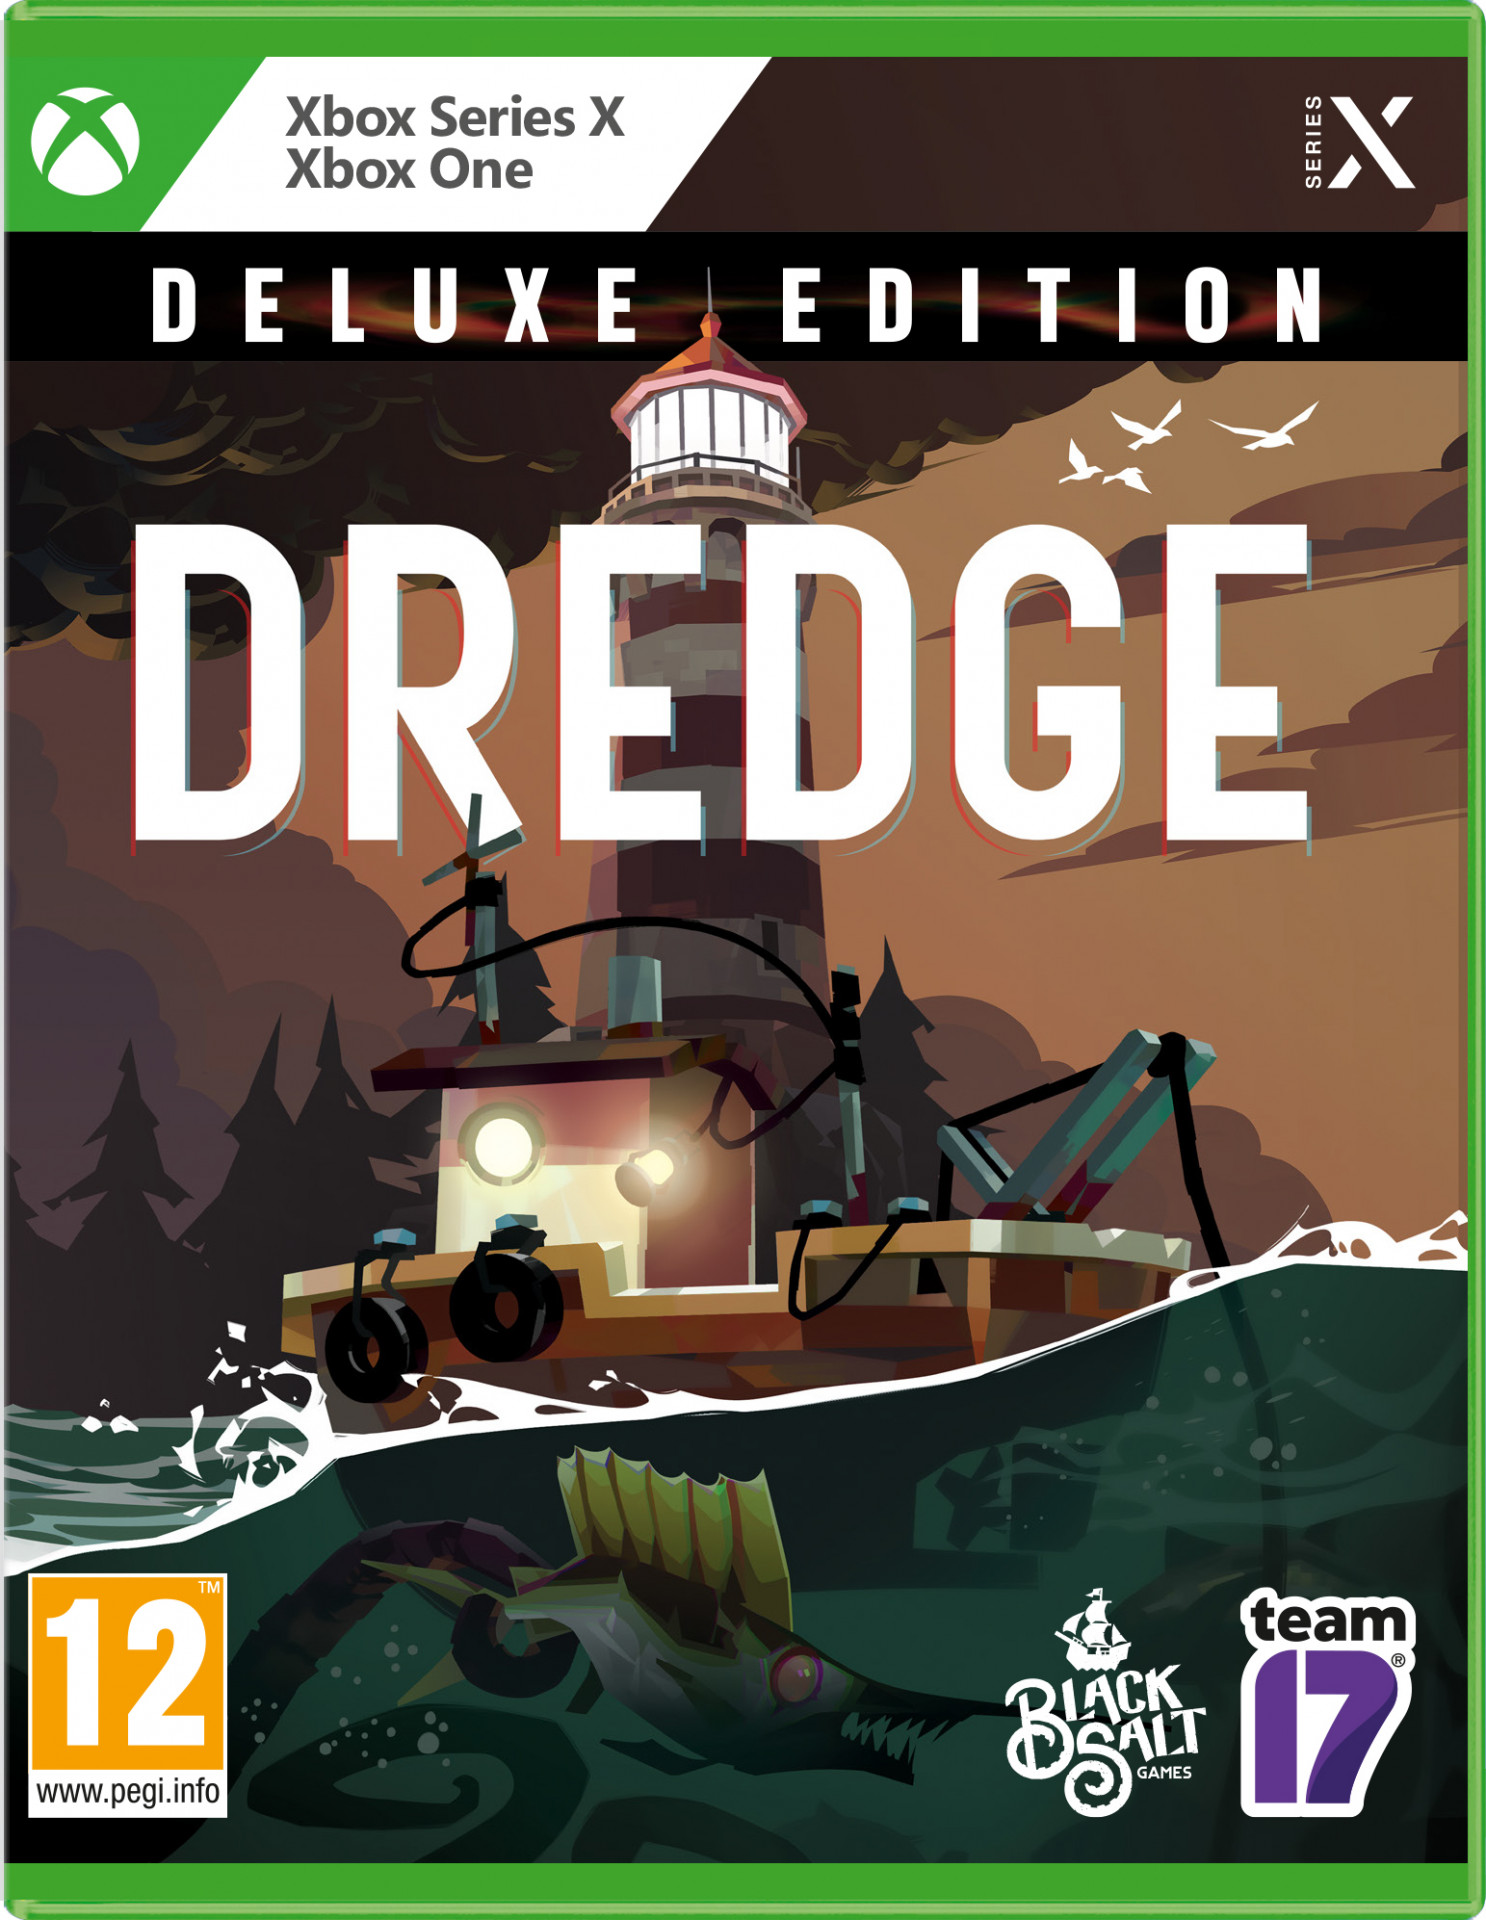 Dredge - Deluxe Edition (Xbox One), Team 17